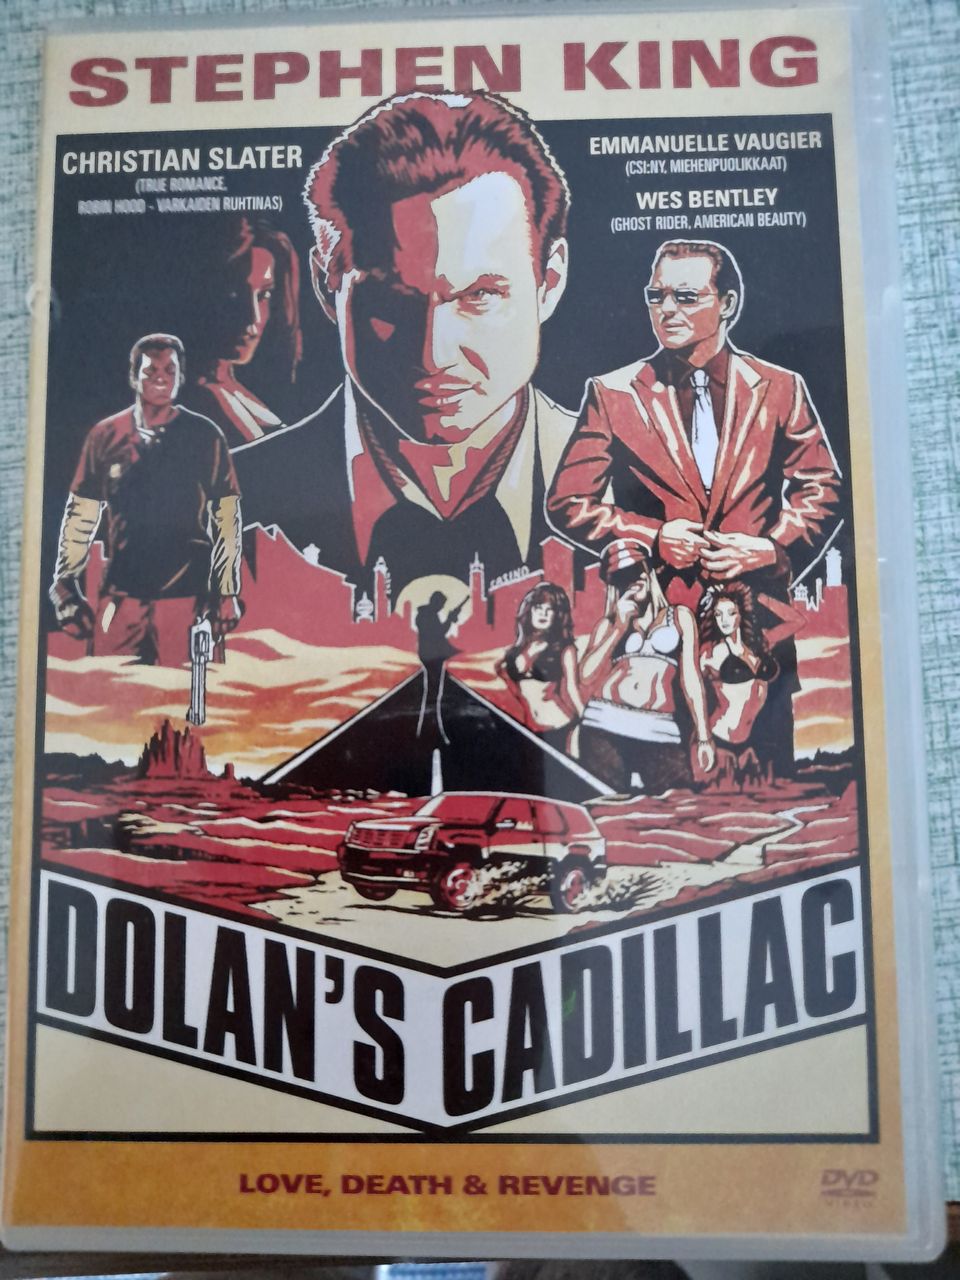 Dolan's cadillac dvd